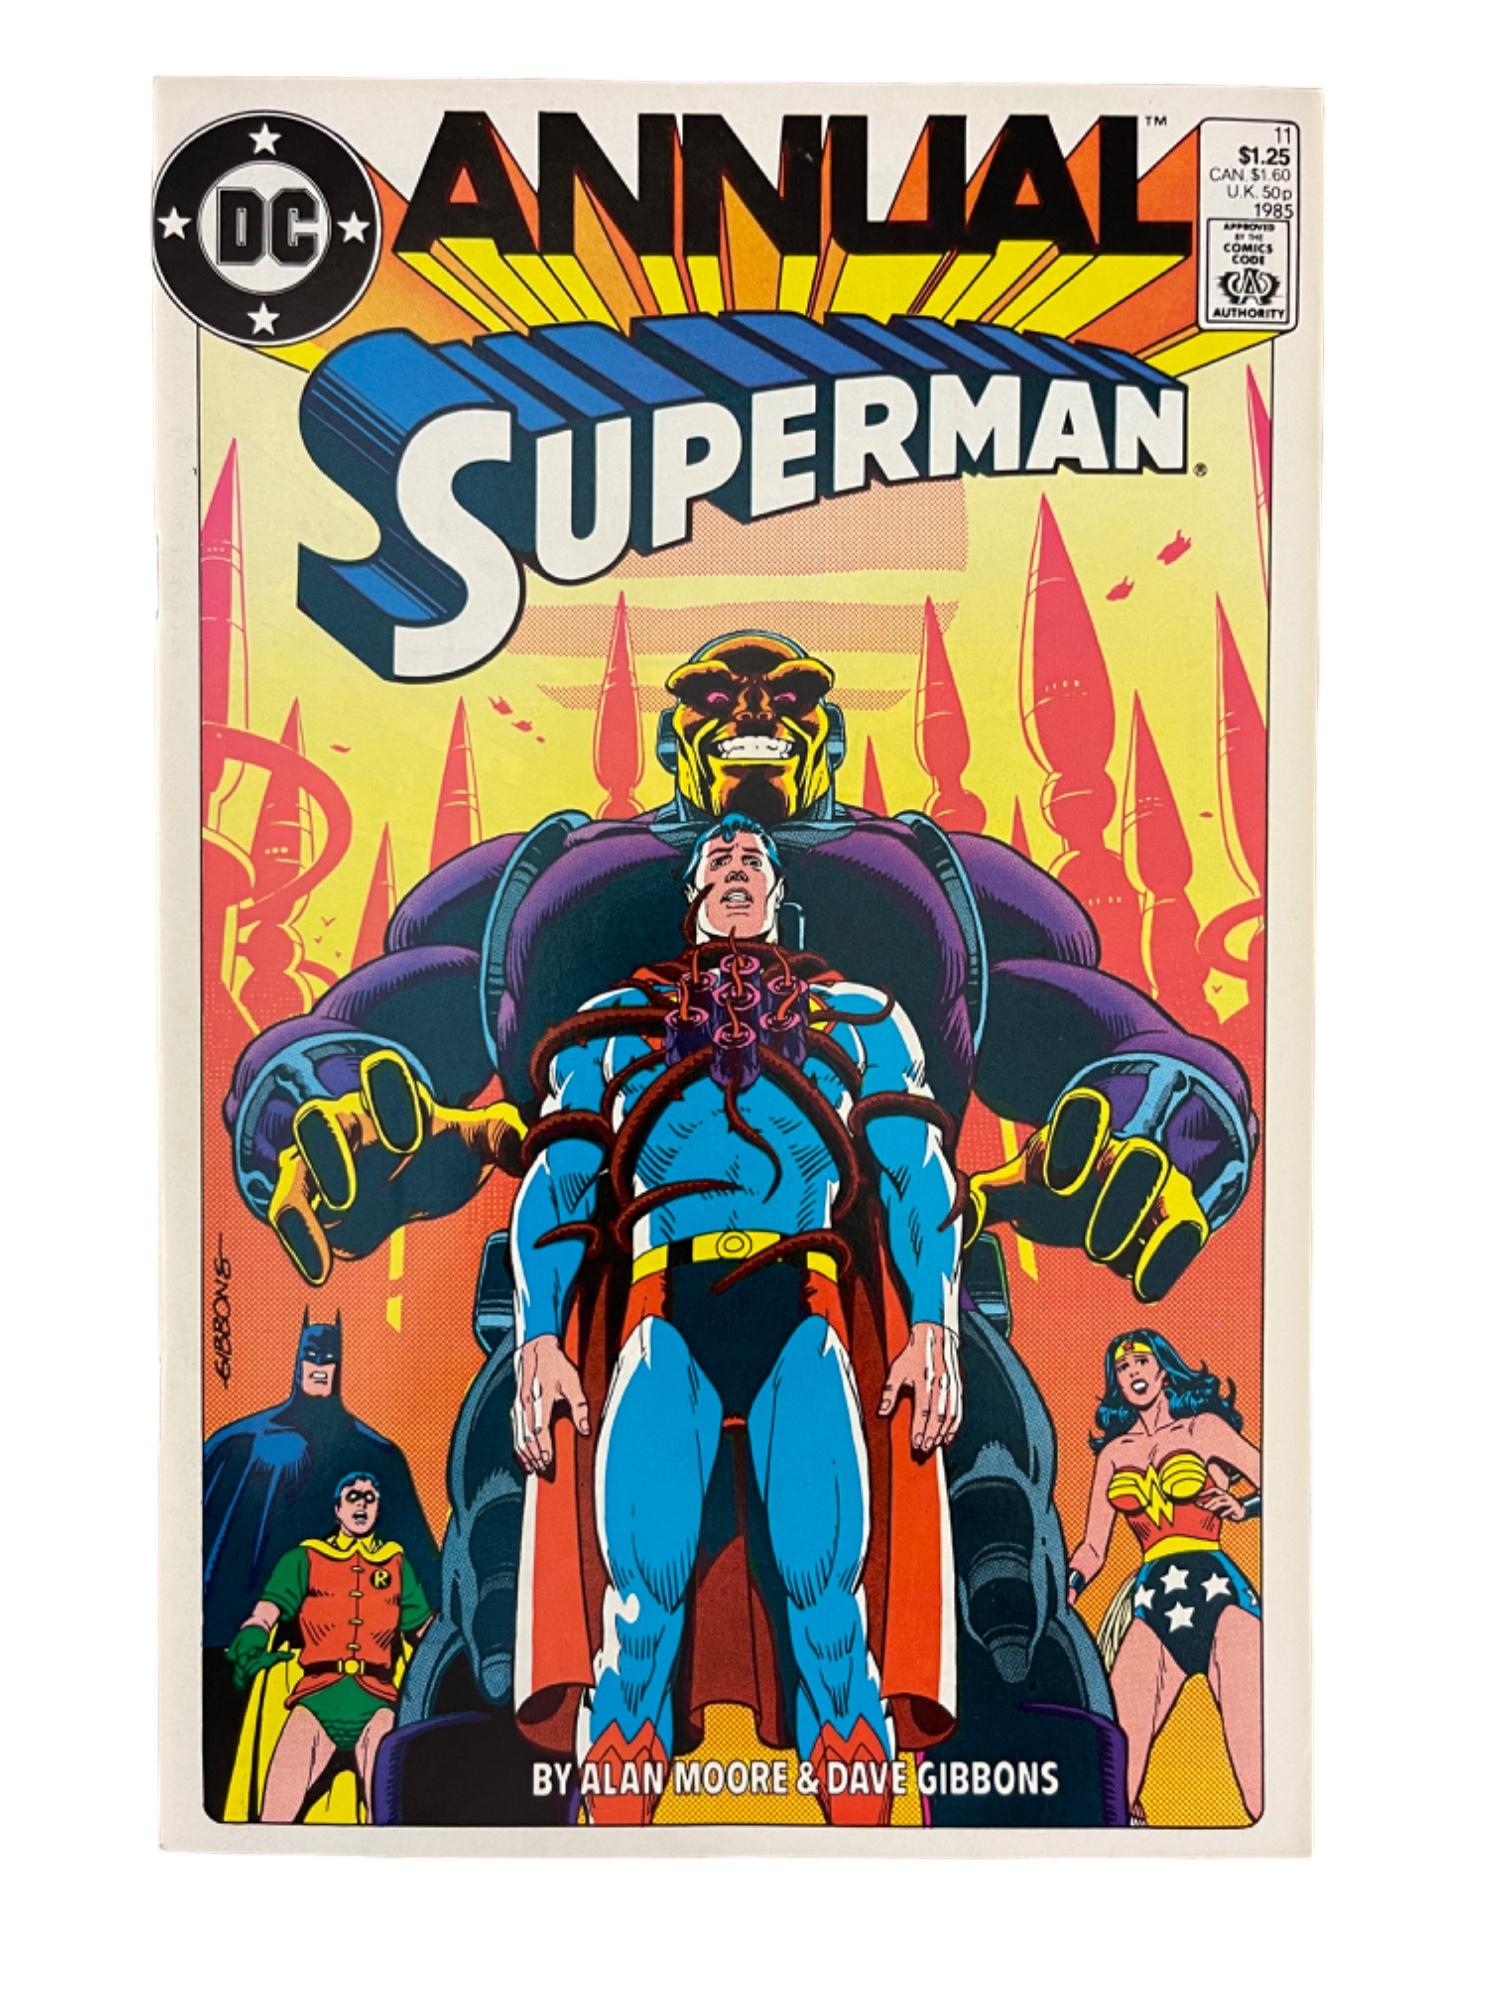 Superman Annual #11 1985 Marvel DC Comic Book